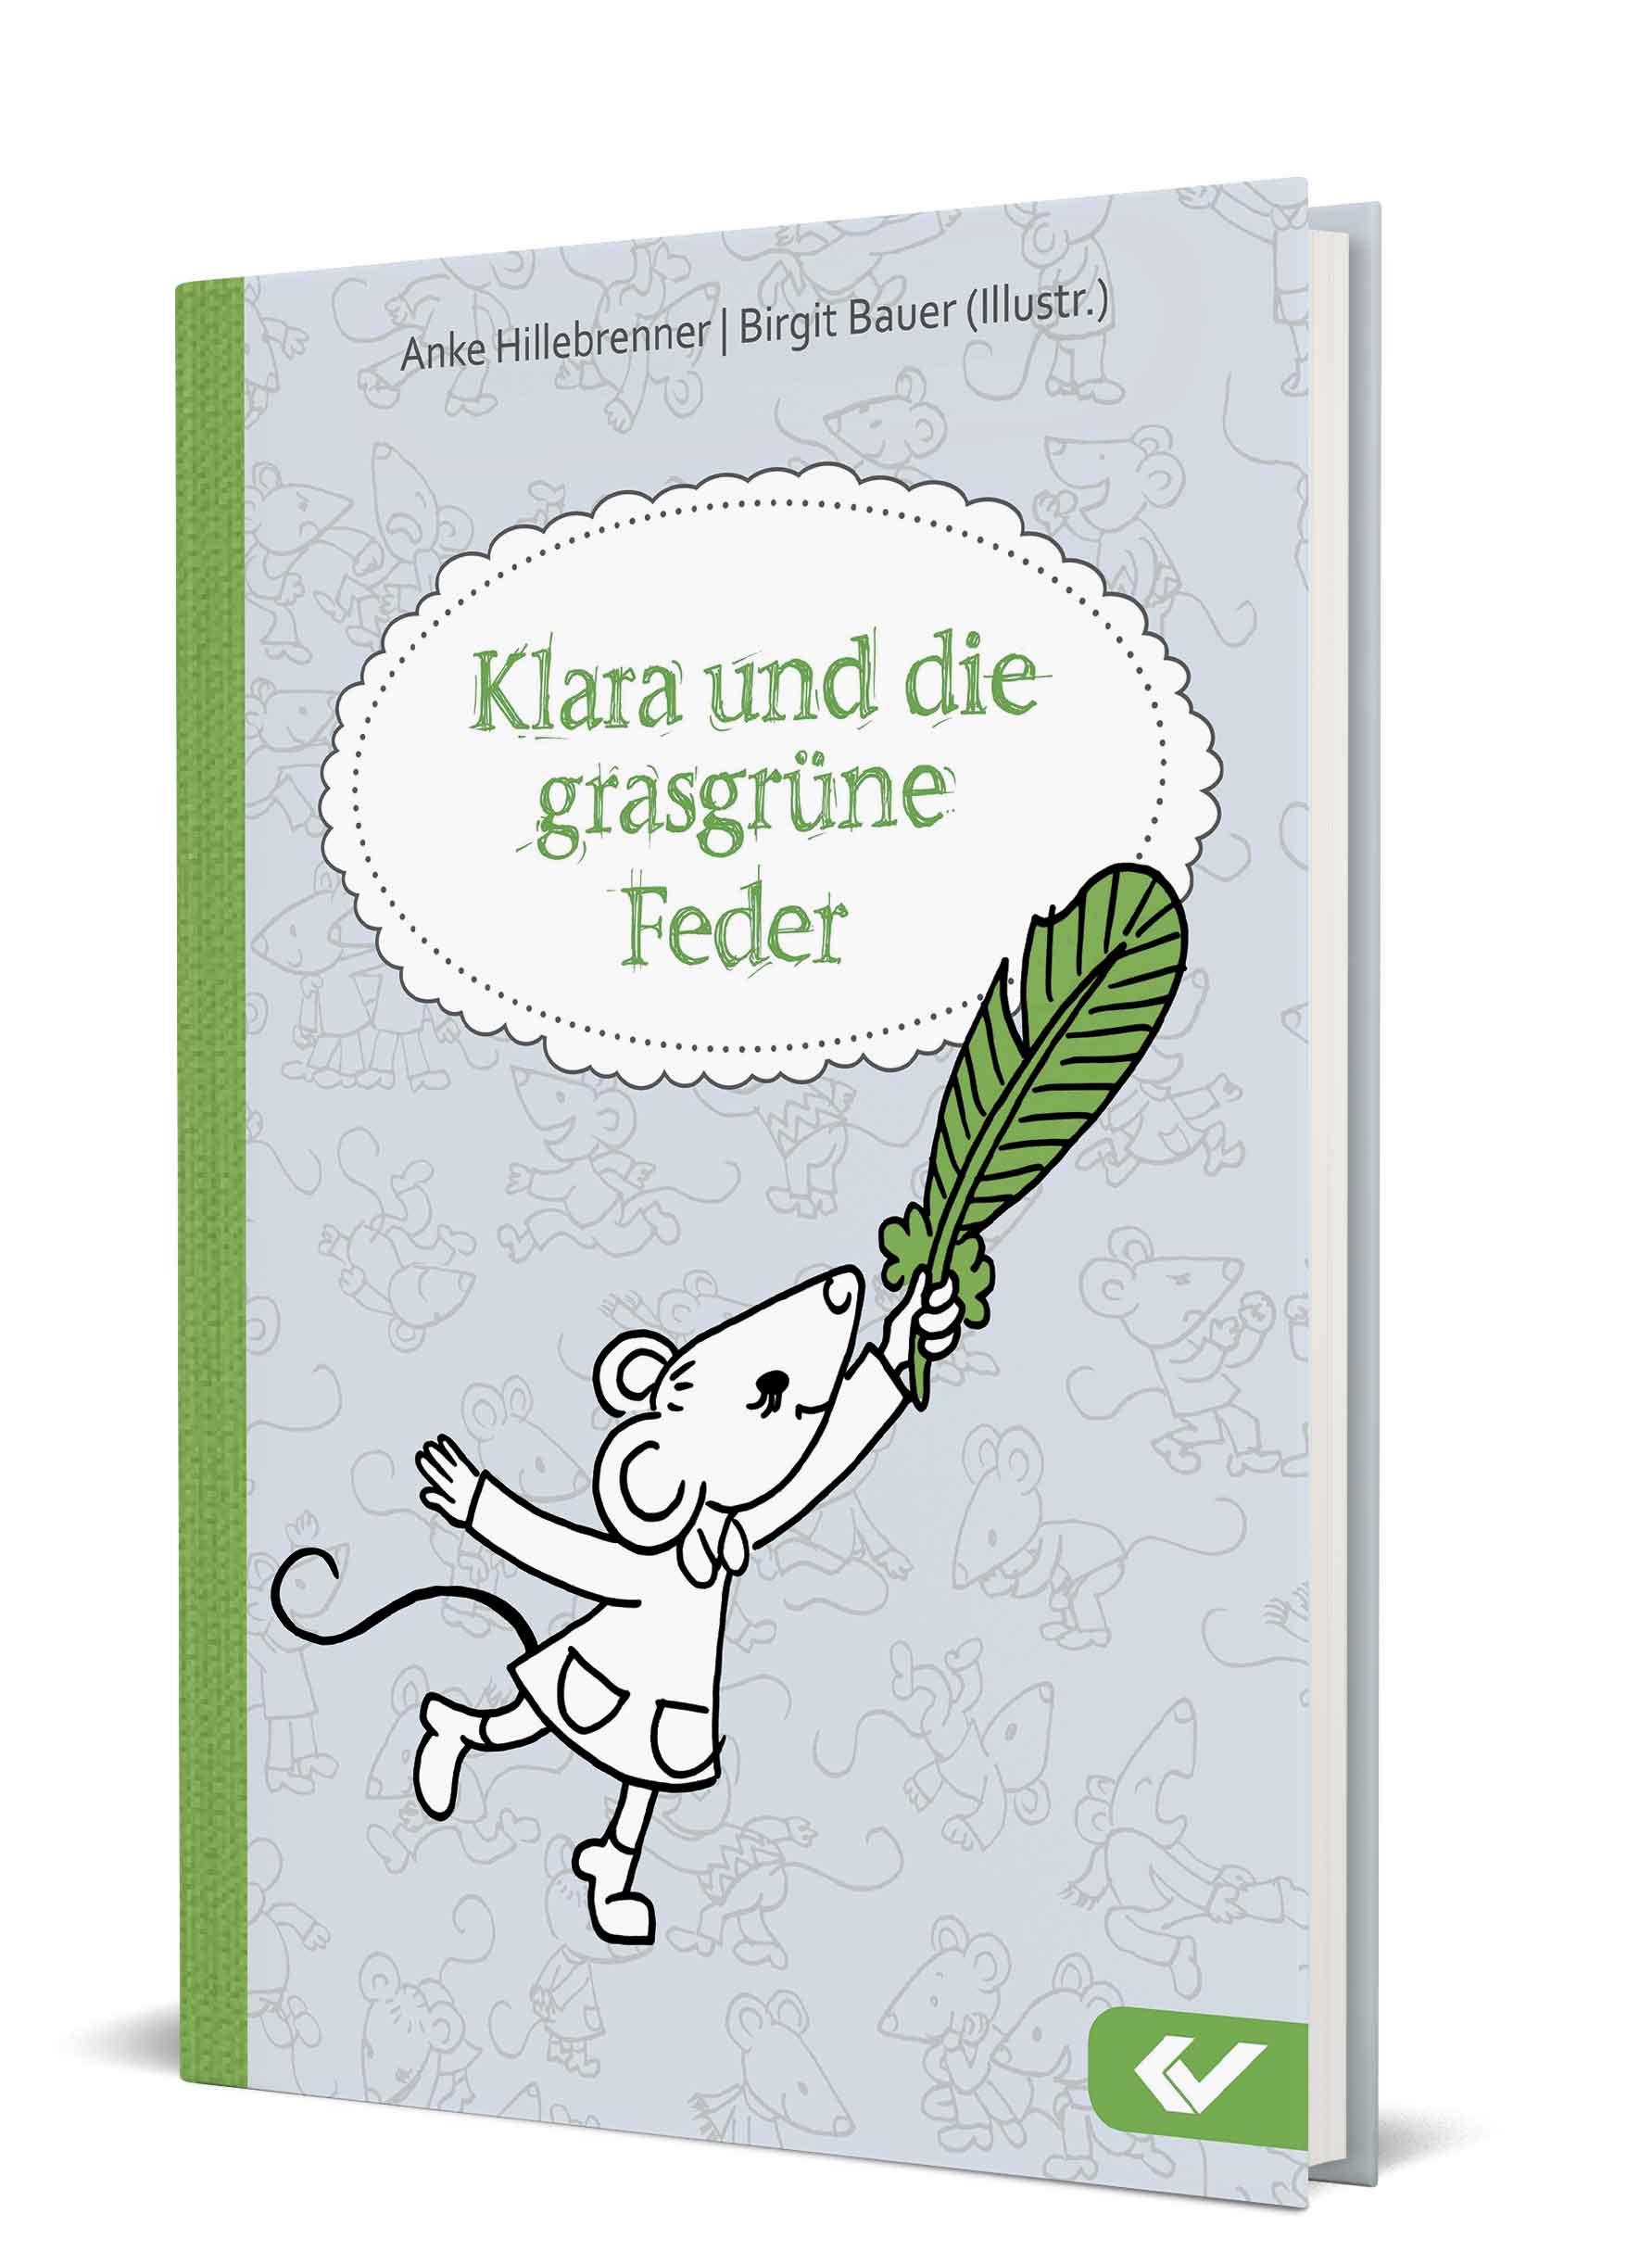 Anke Hillebrenner/Birgit Bauer (Illustr.): Klara und die grasgrüne Feder